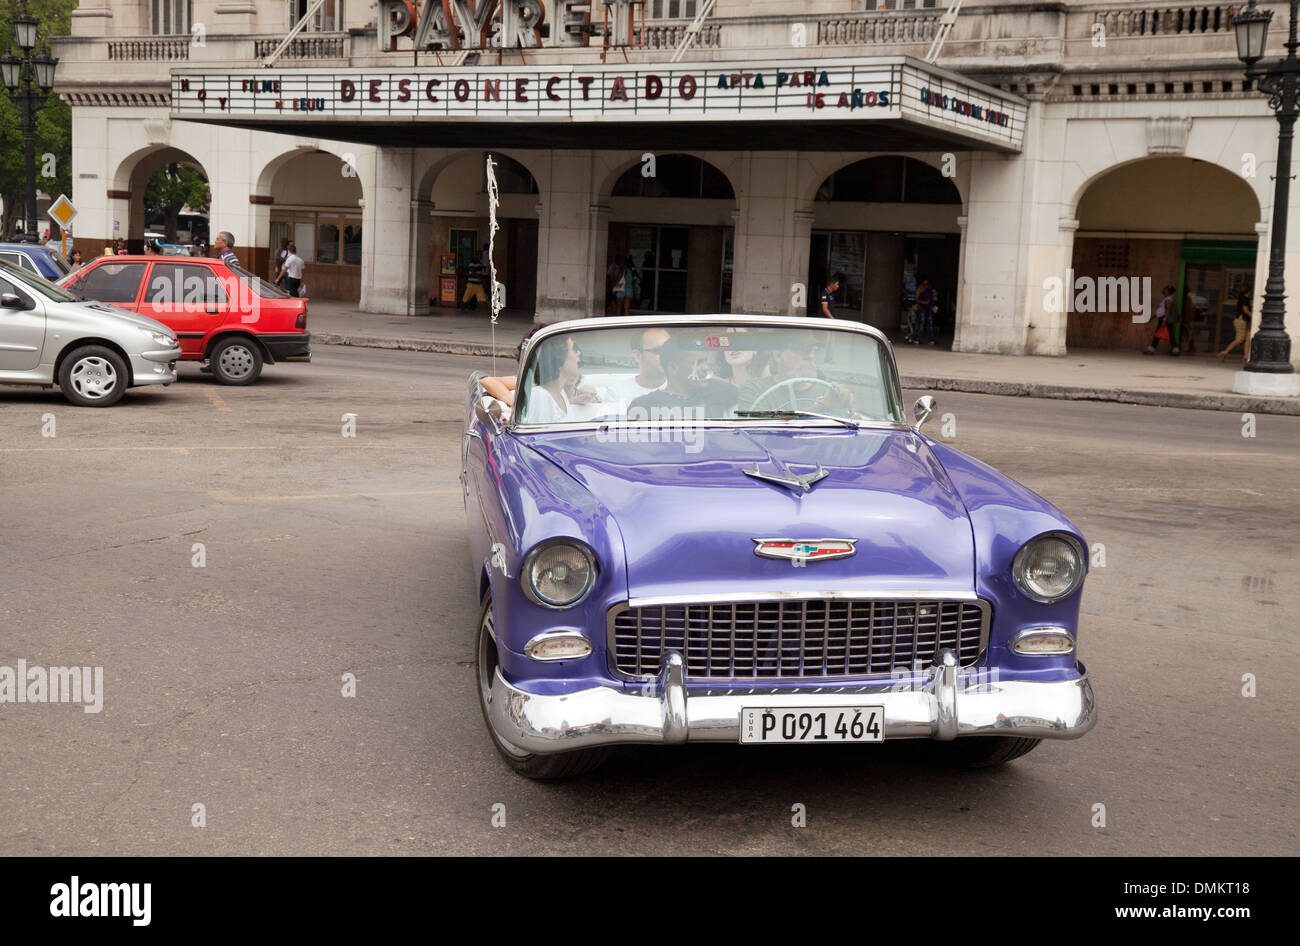 Classic vintage american car, central Havana, Cuba, Caribbean, Latin America Stock Photo